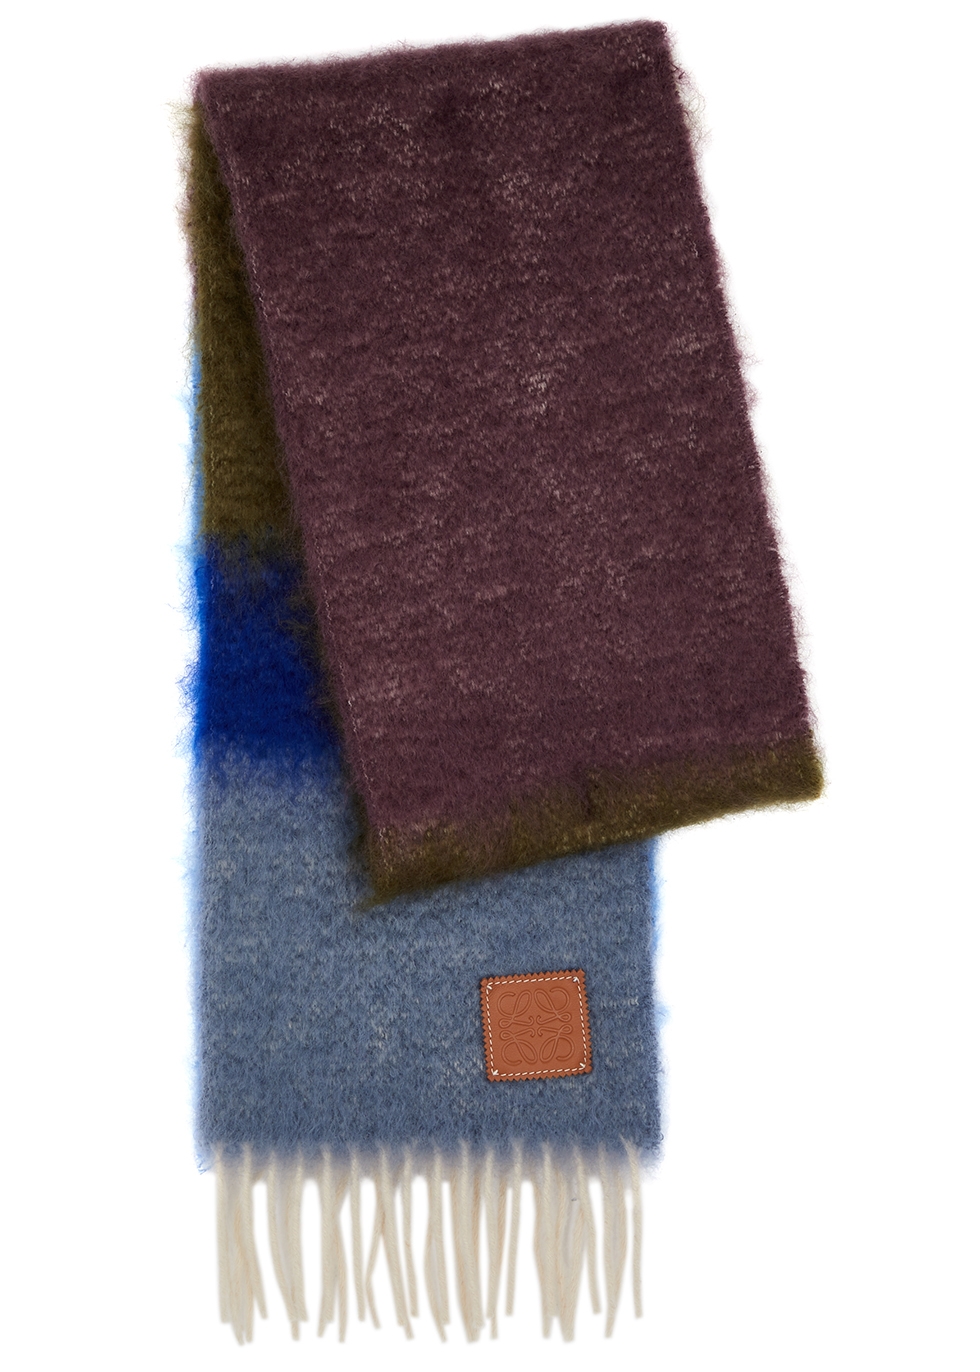 Striped mohair-blend scarf